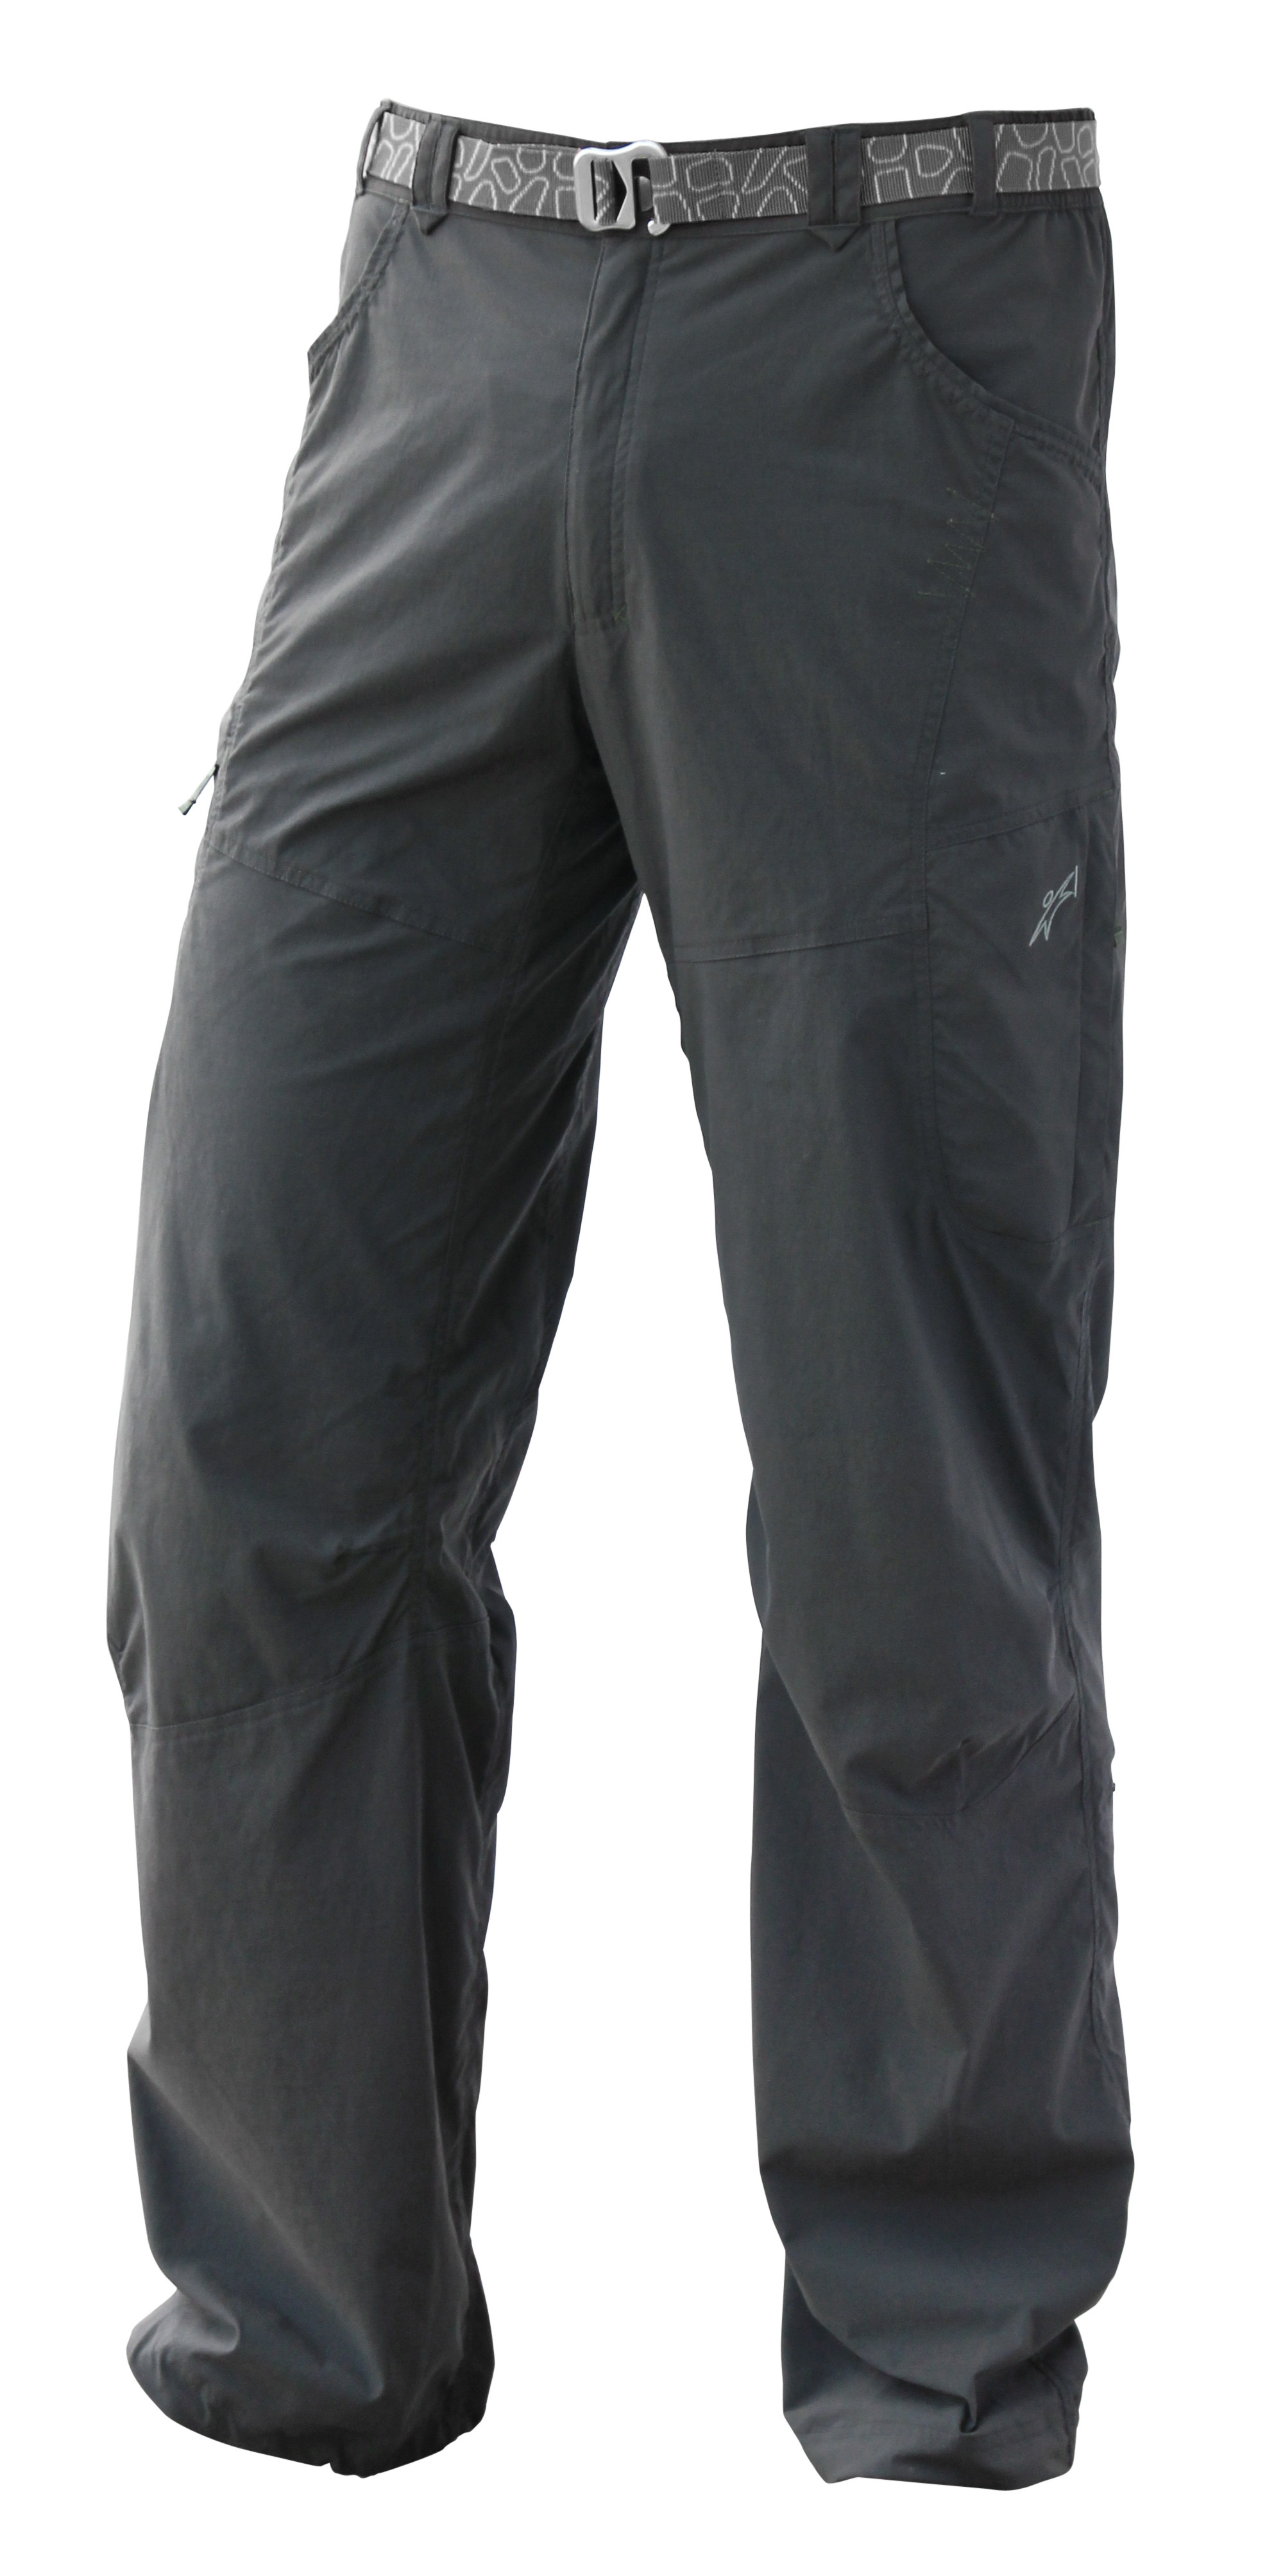 Warmpeace kalhoty Corsar Barva: Iron, Velikost nebo typ: M